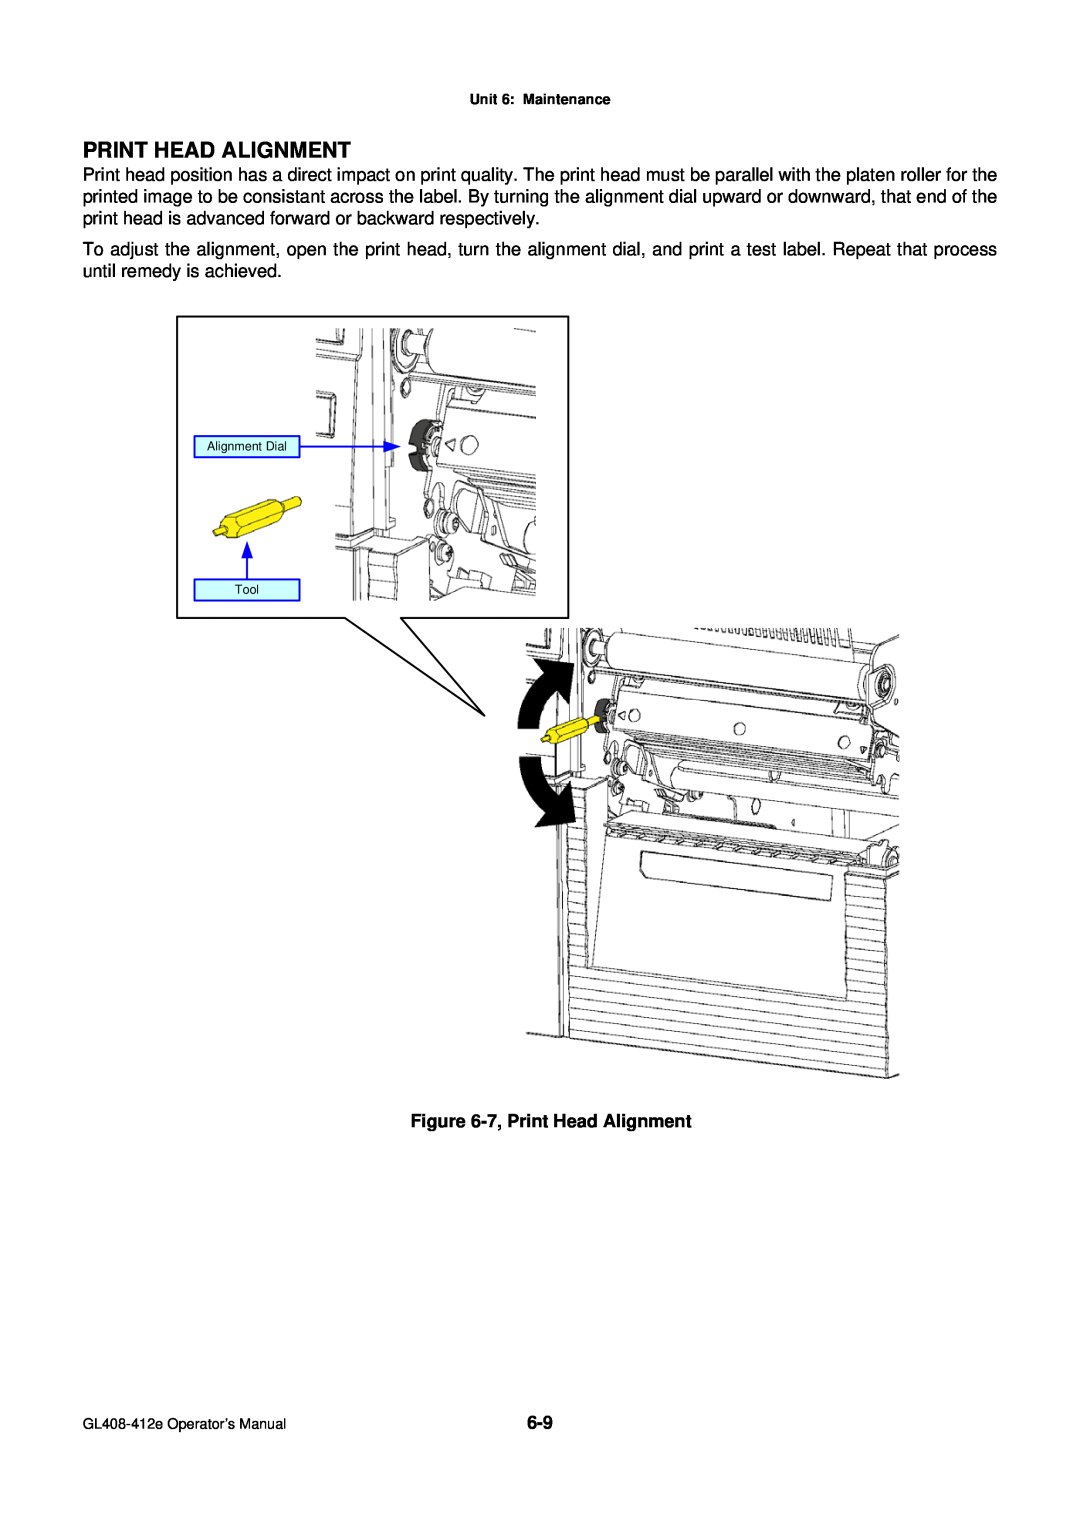 SATO GL4XXE manual 7, Print Head Alignment 